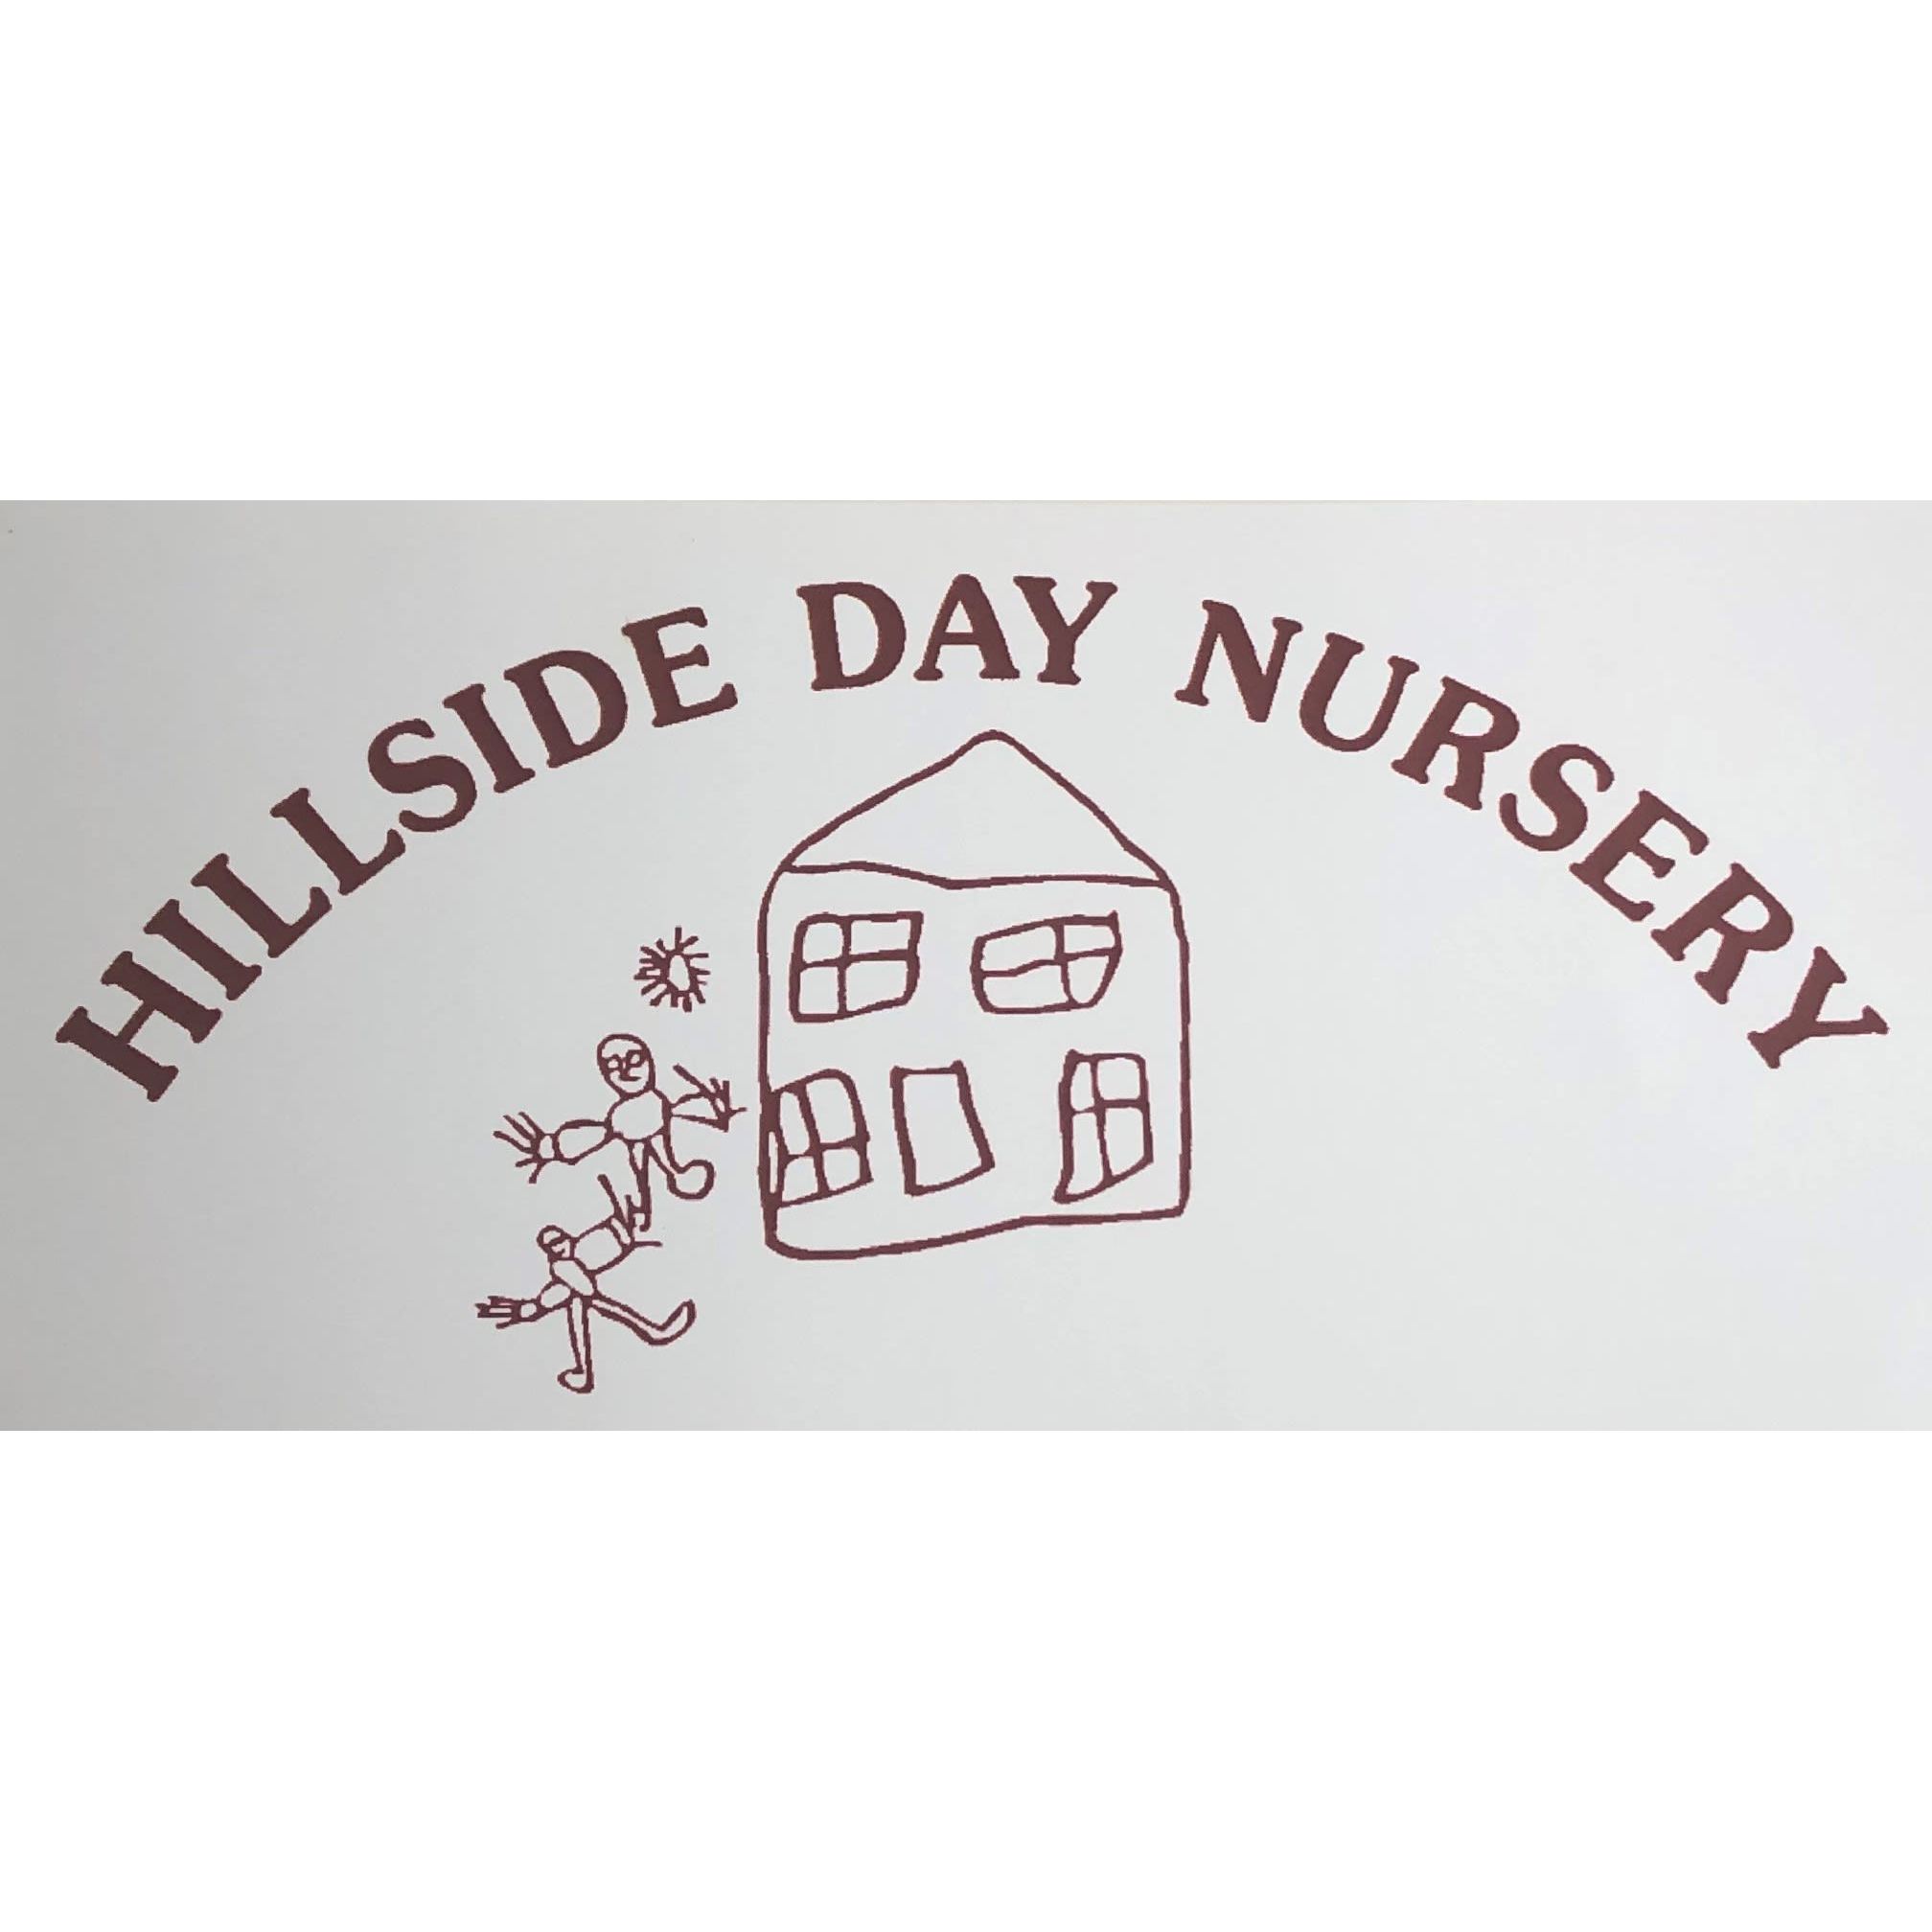 Hillside Day Nursery Ltd - Potterswood - Bristol, Gloucestershire BS15 8DB - 01179 604330 | ShowMeLocal.com